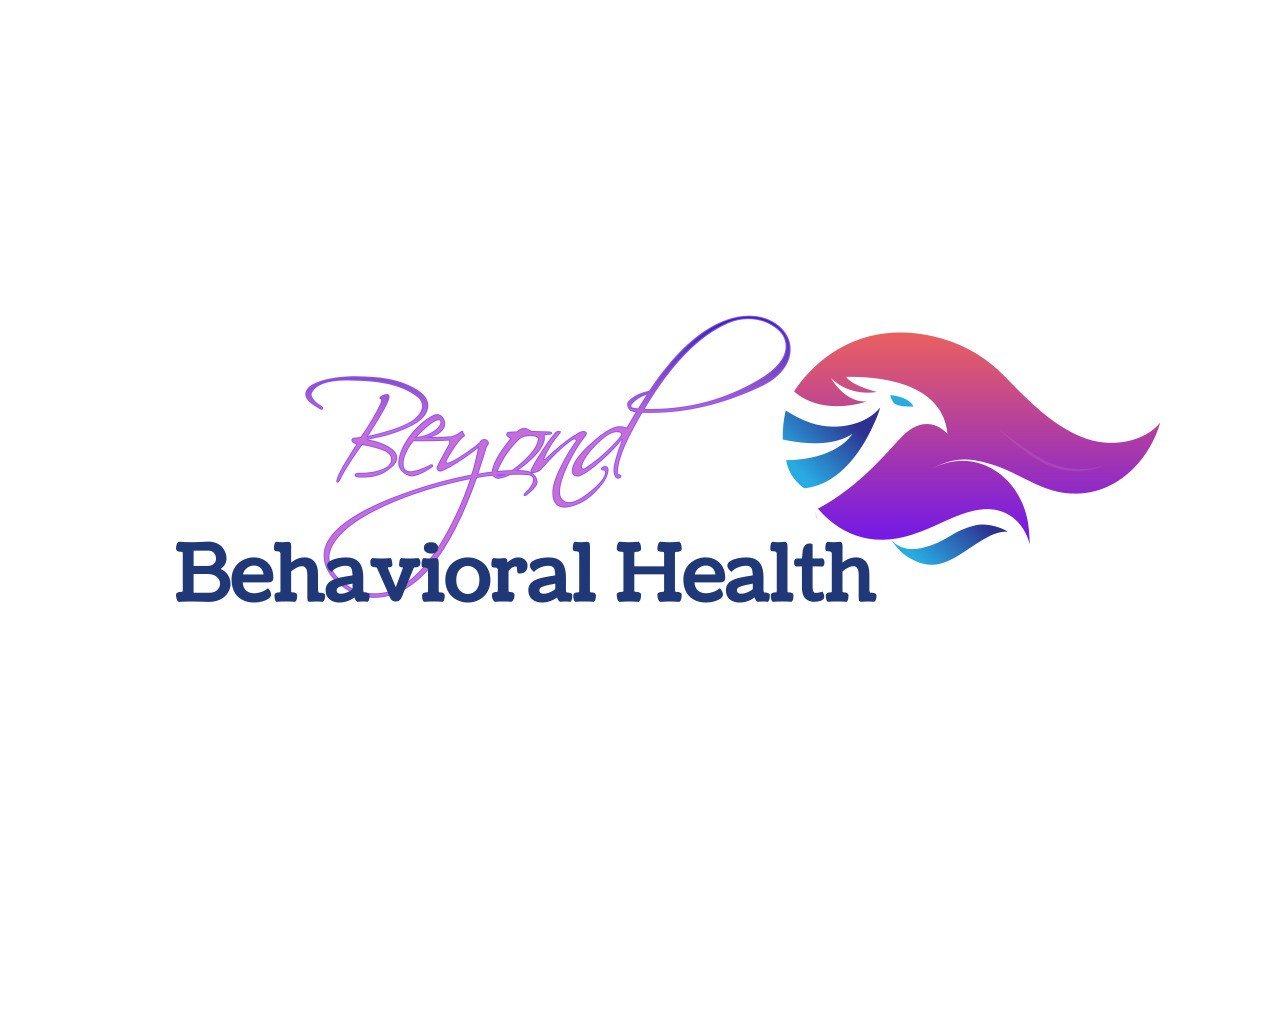 Beyond Behavioral Health